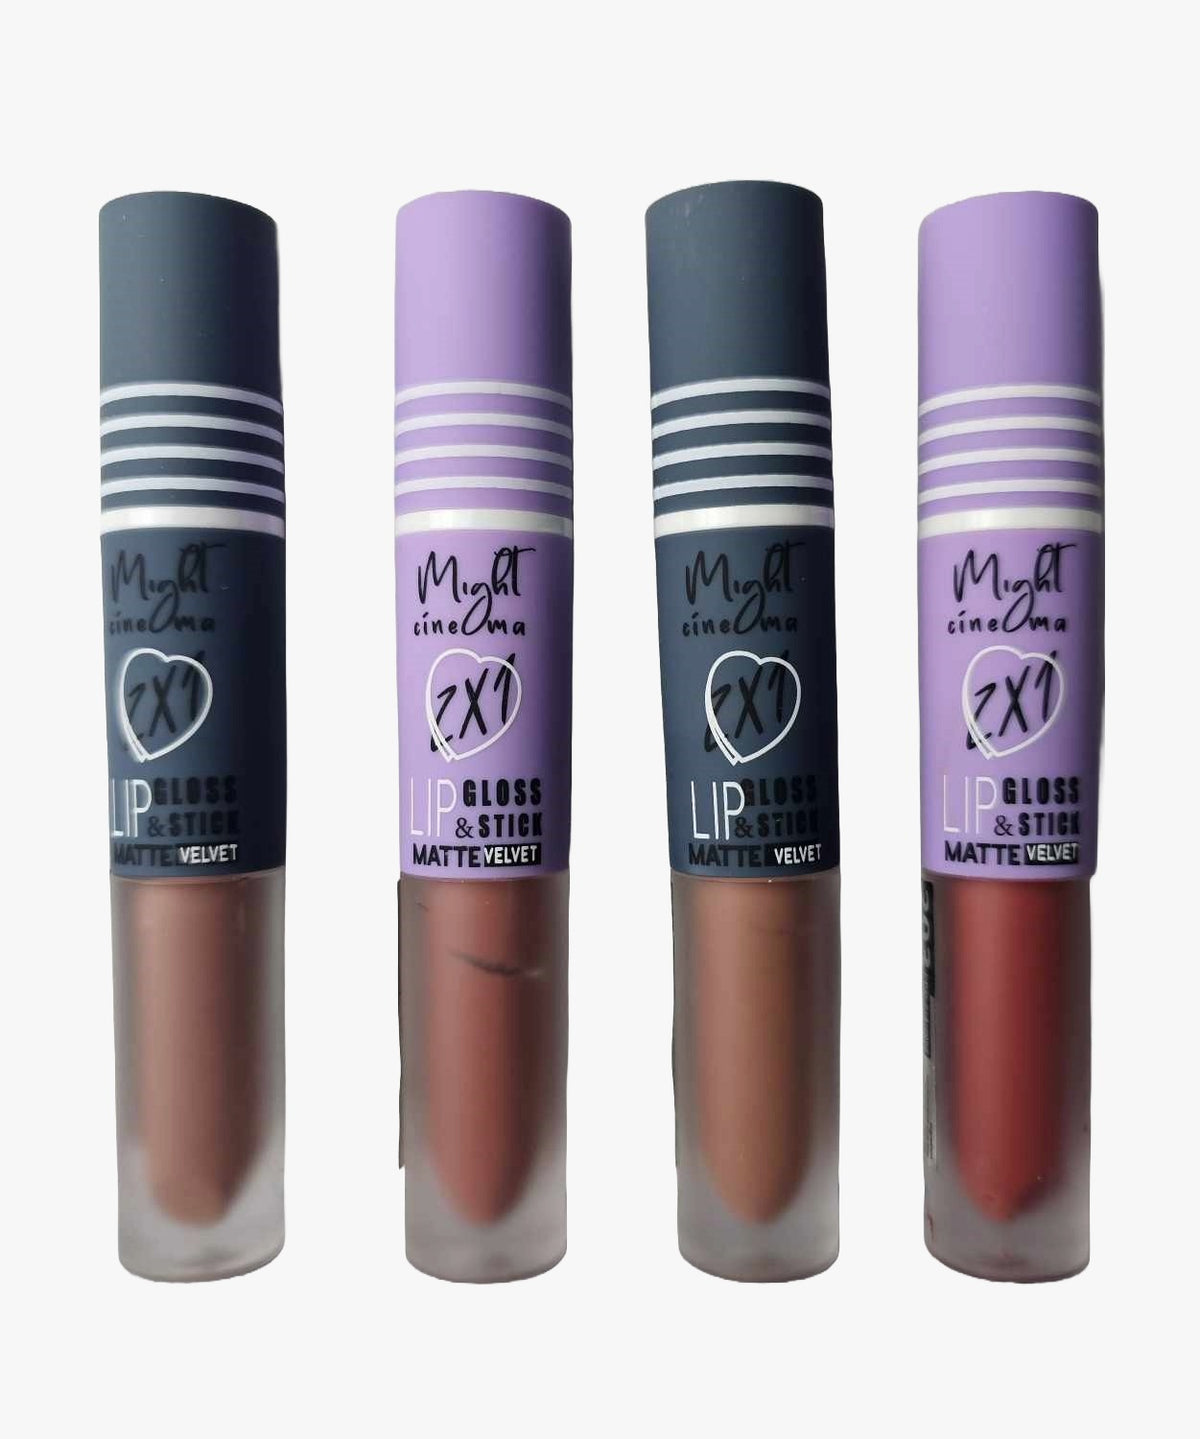 Might Cinema 2X1 Lip Gloss & Lip Stick Matte Velvet 4 Colors -SET : B